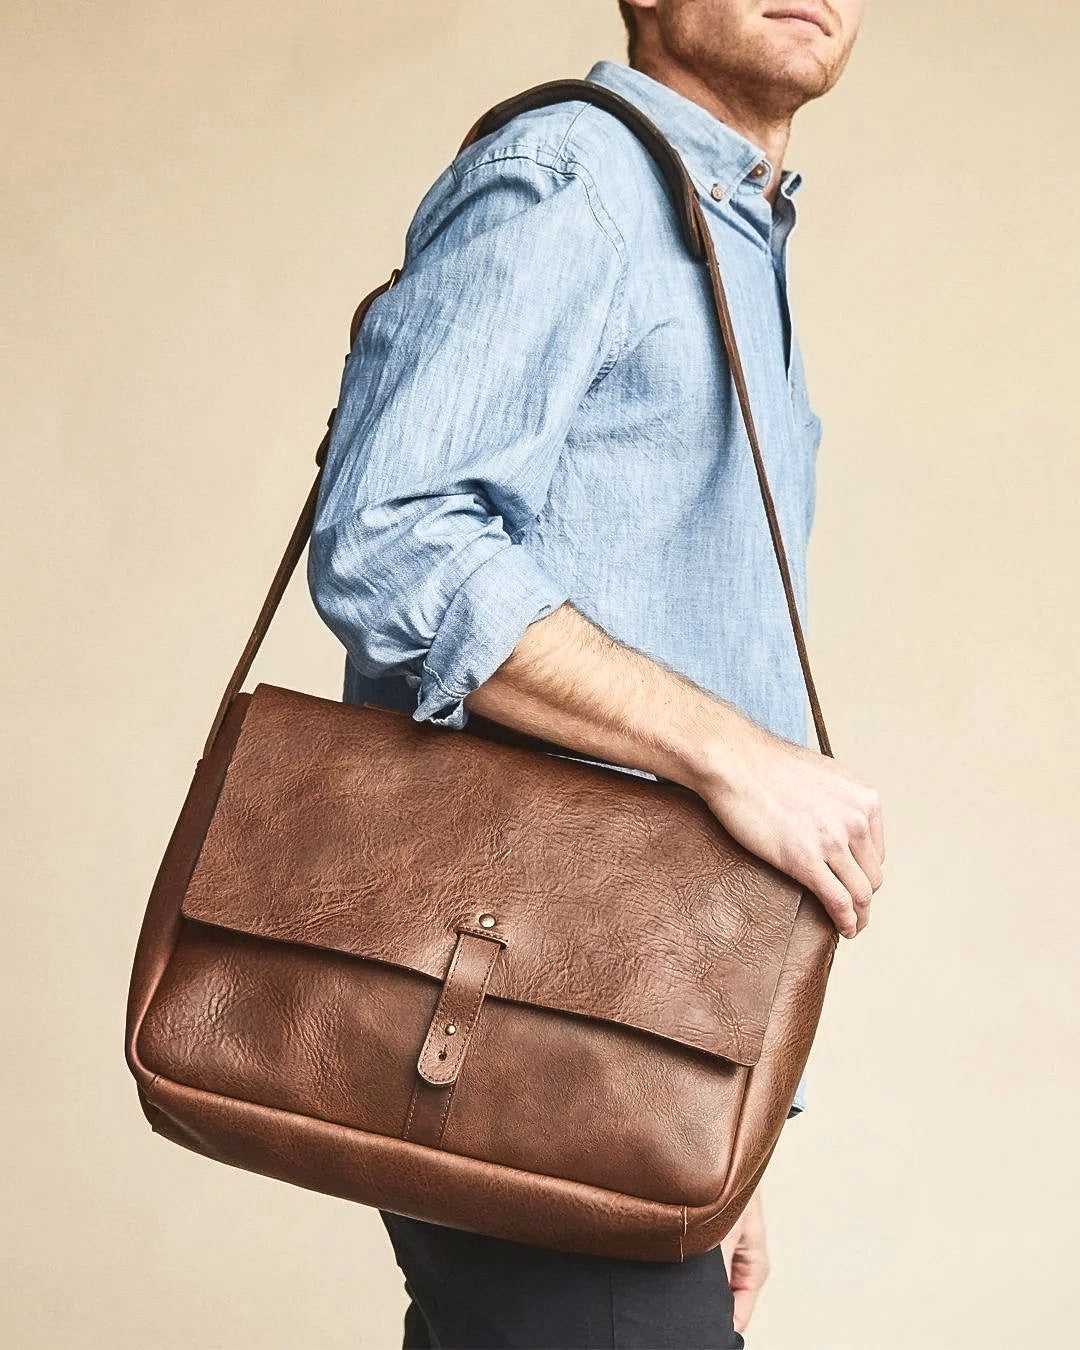  messenger bag pattern, office bag, briefcase pattern, laptop bag pattern